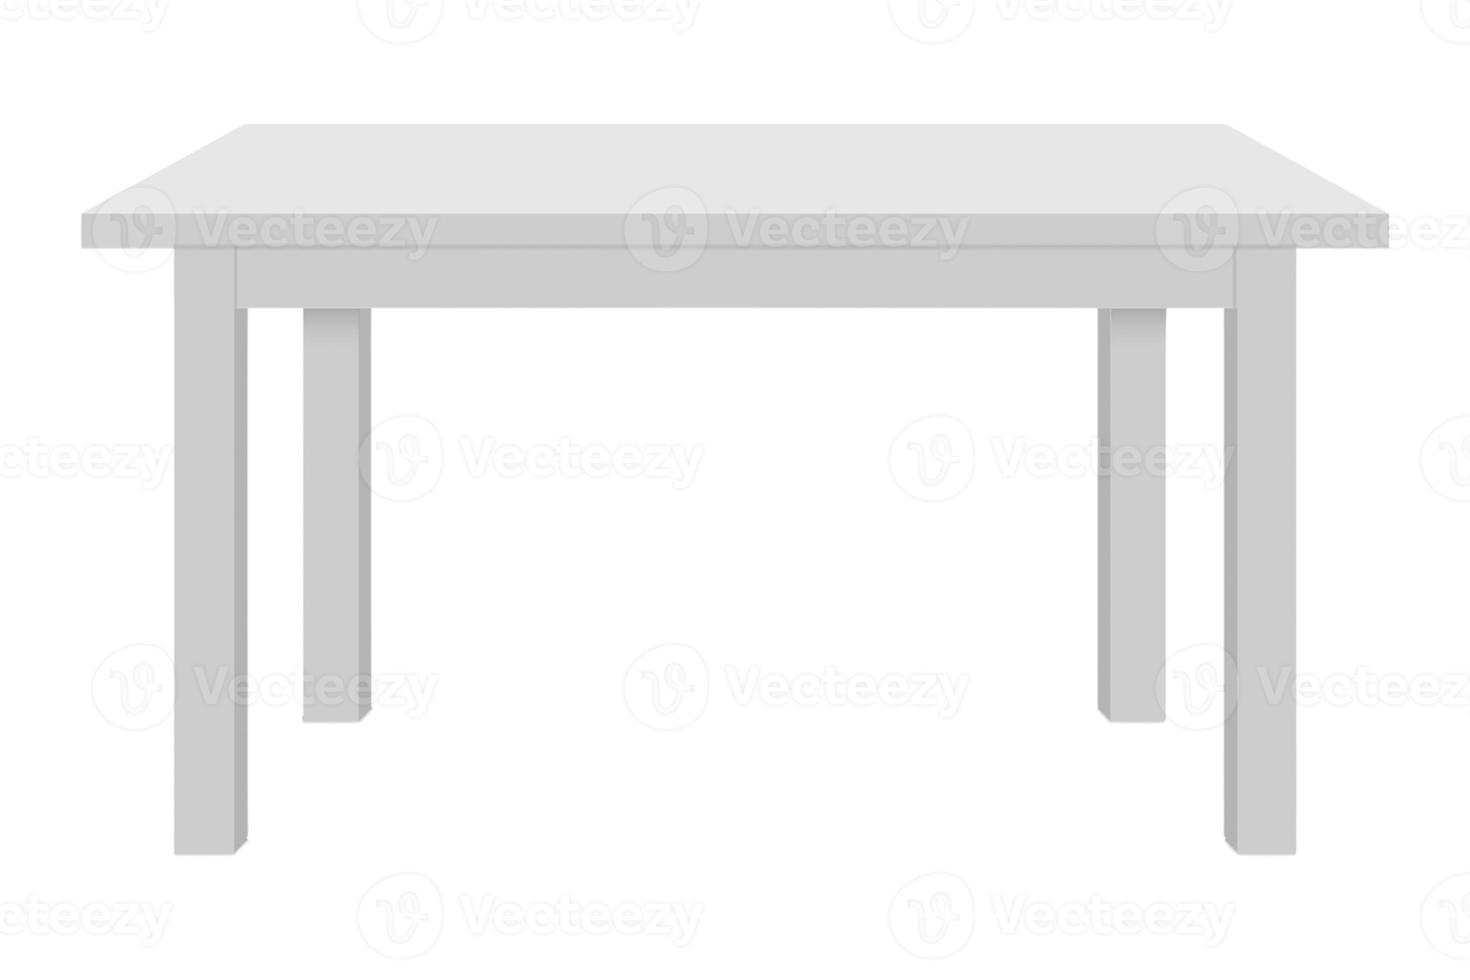 362 blanco comida mesa aislado en un transparente antecedentes foto